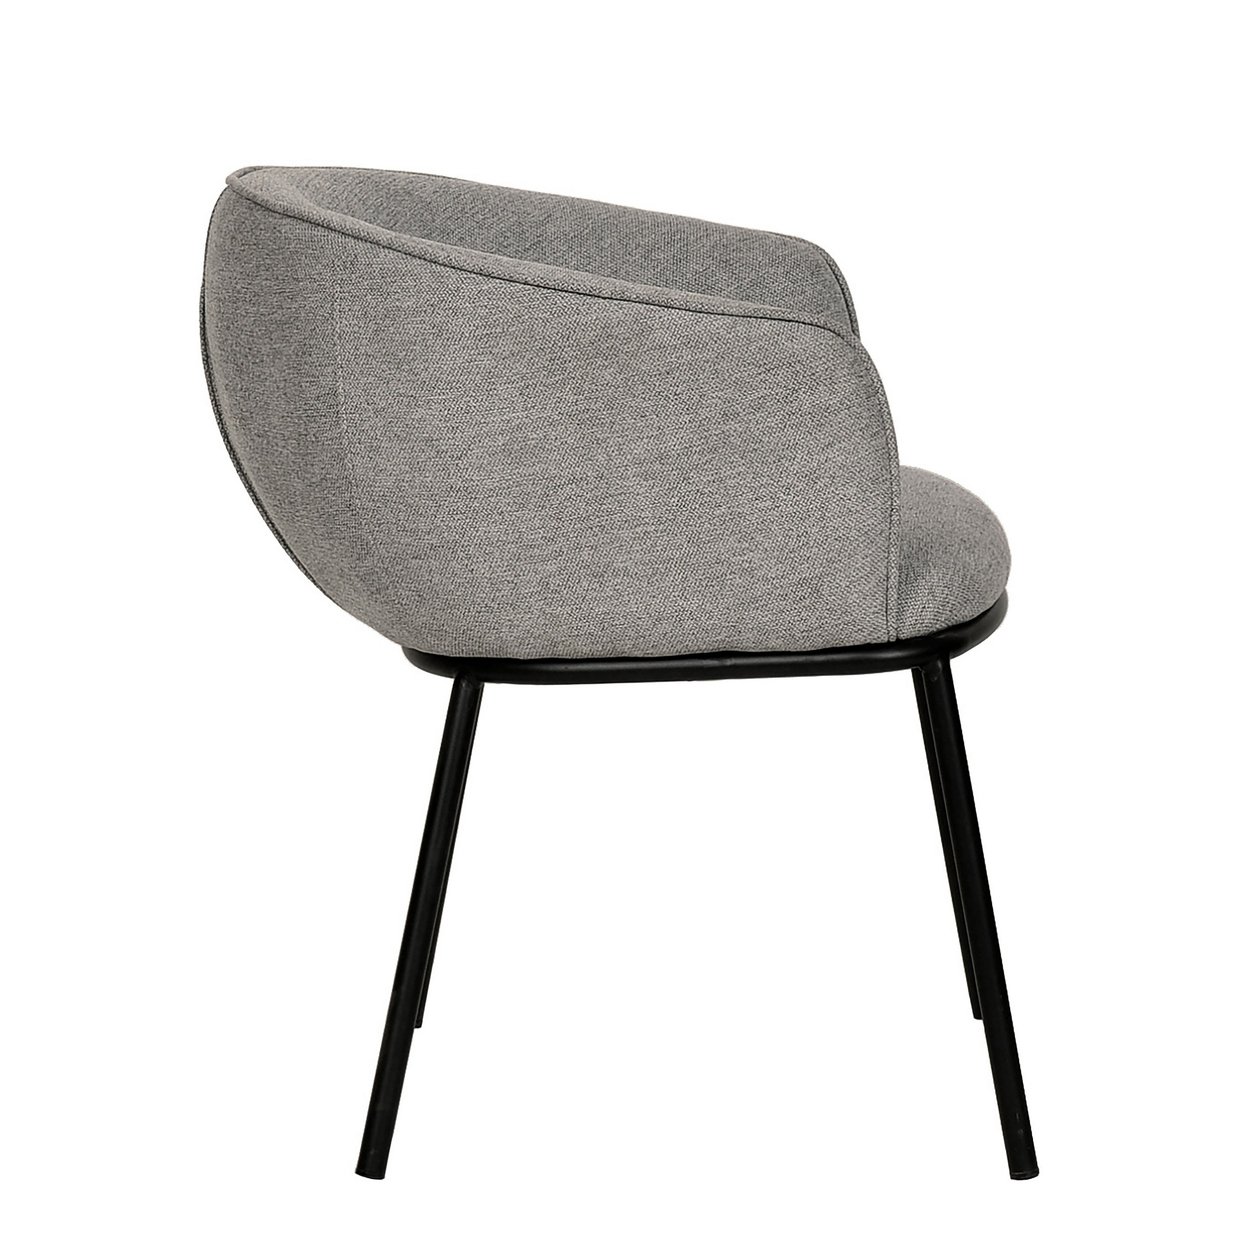 25 Inch Dining Chair, Gray Polyester, Black Metal Frame, Cushioned Seat- Saltoro Sherpi